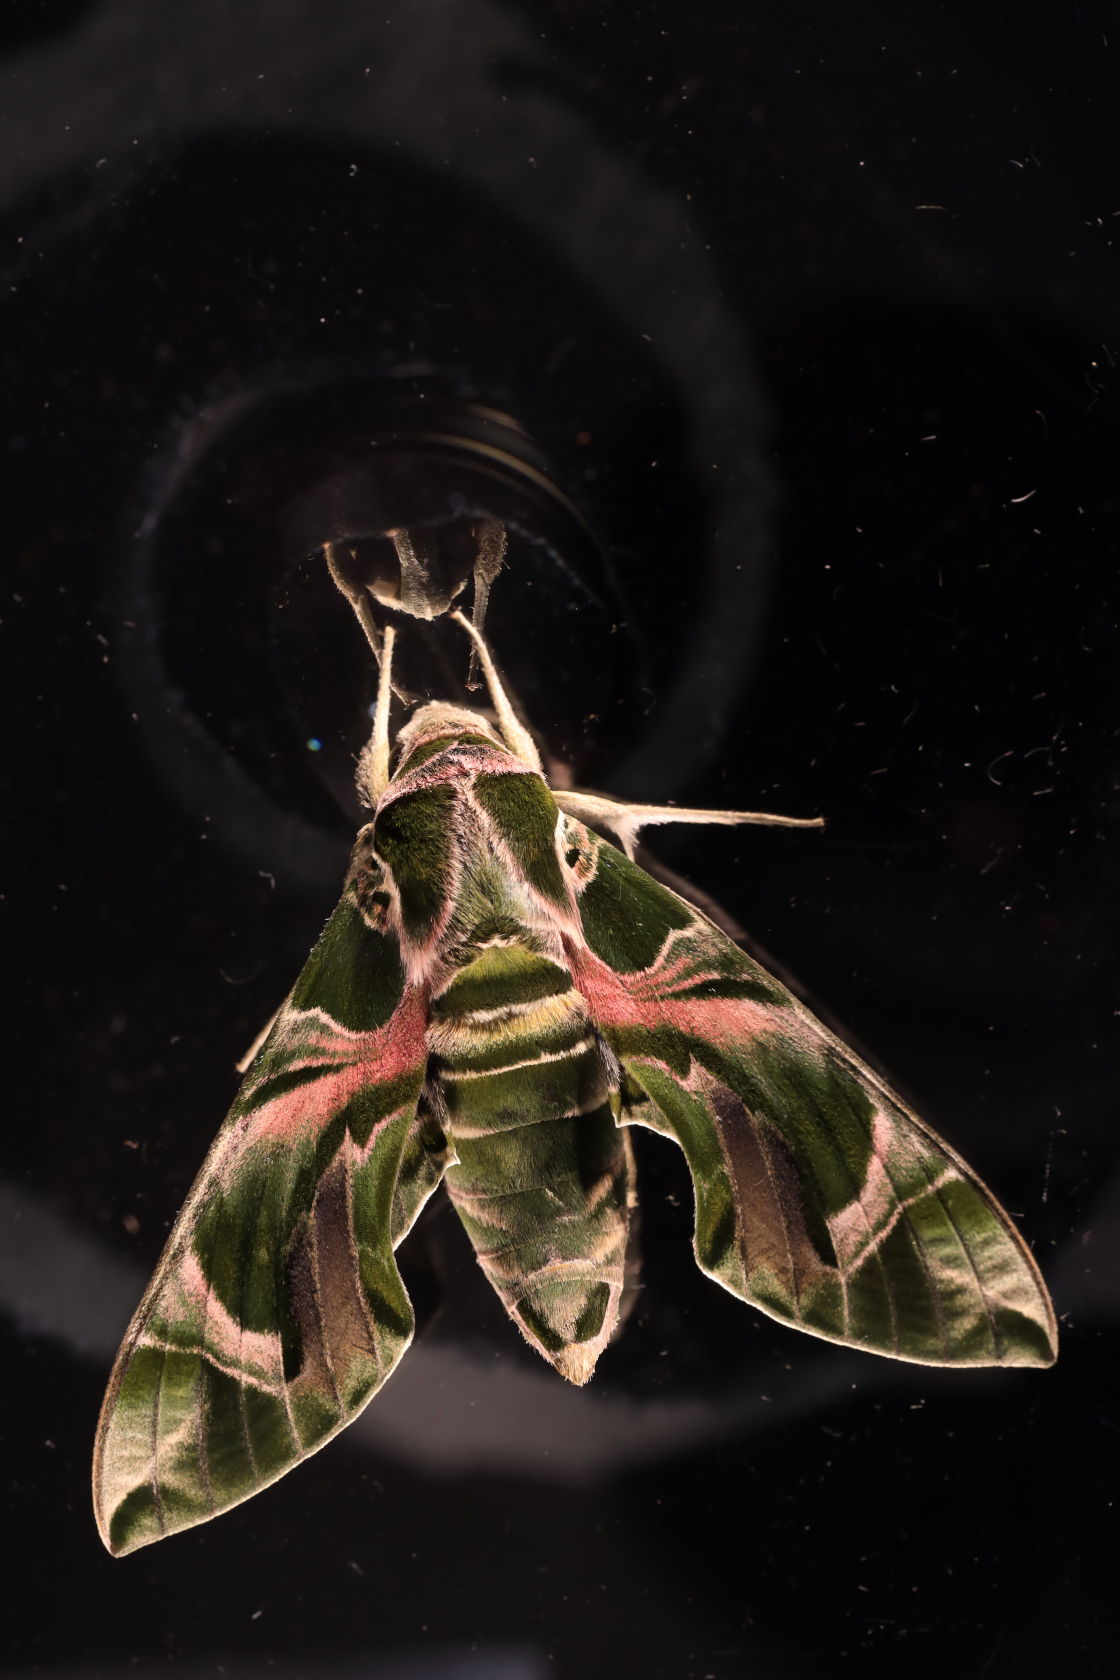 Image of a male Atlas moth